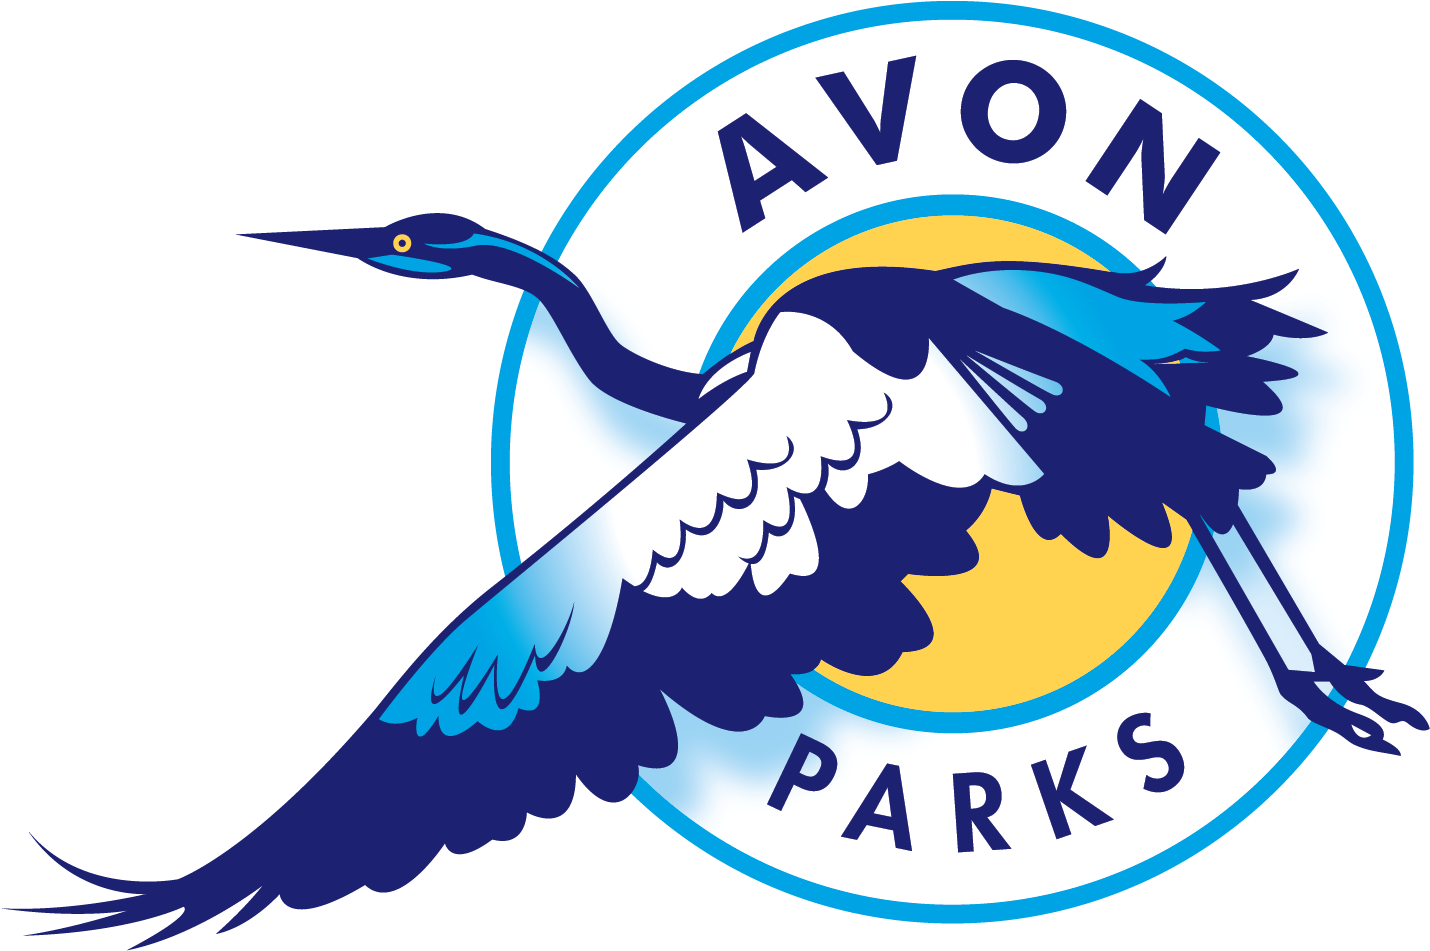 Avon Parks And Recreation Avon Parks - Avon Parks & Recreation (1728x1150), Png Download